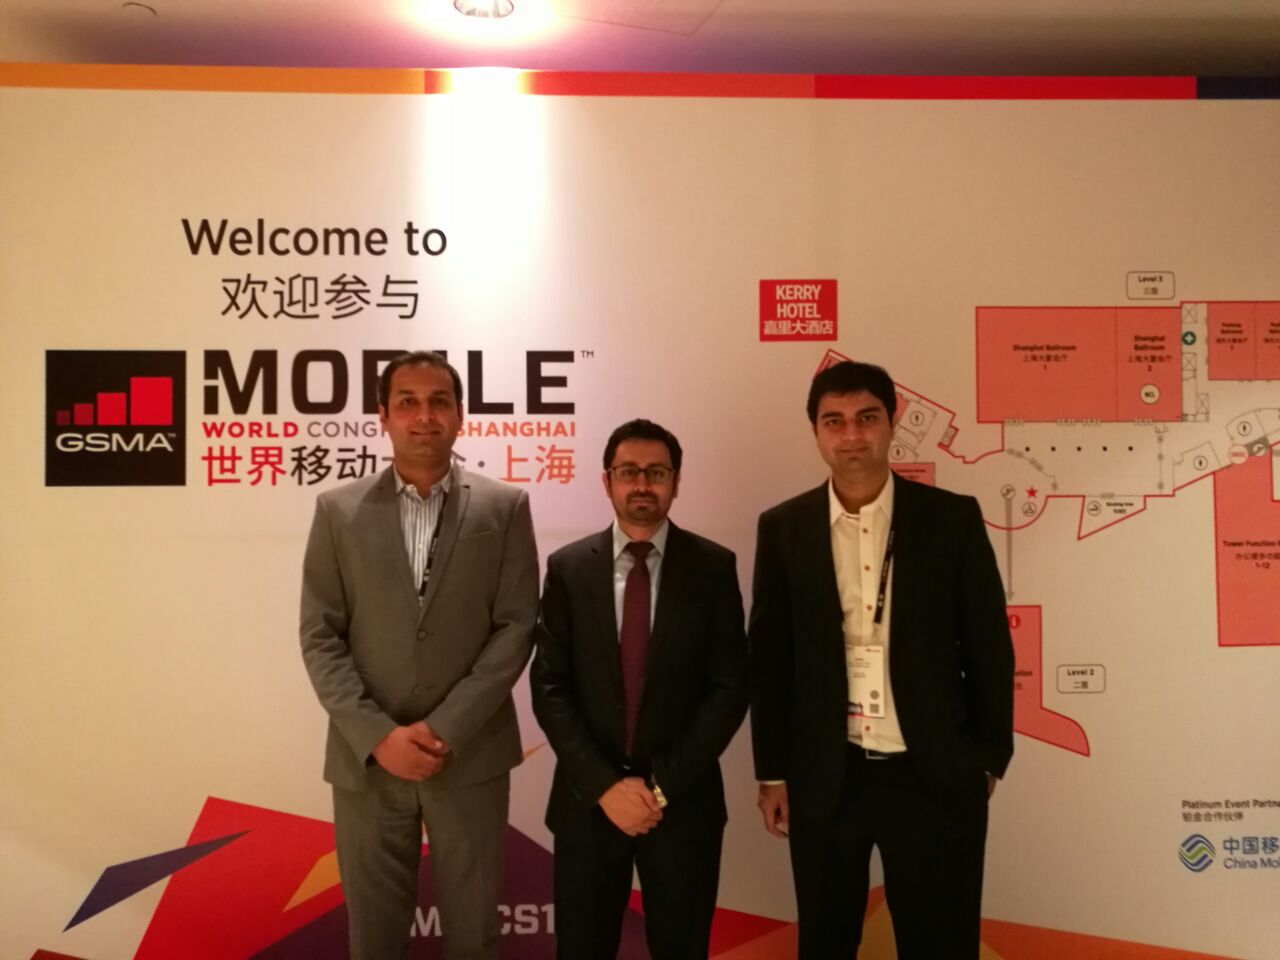 Mobile World Congress (MWC) Shanghai